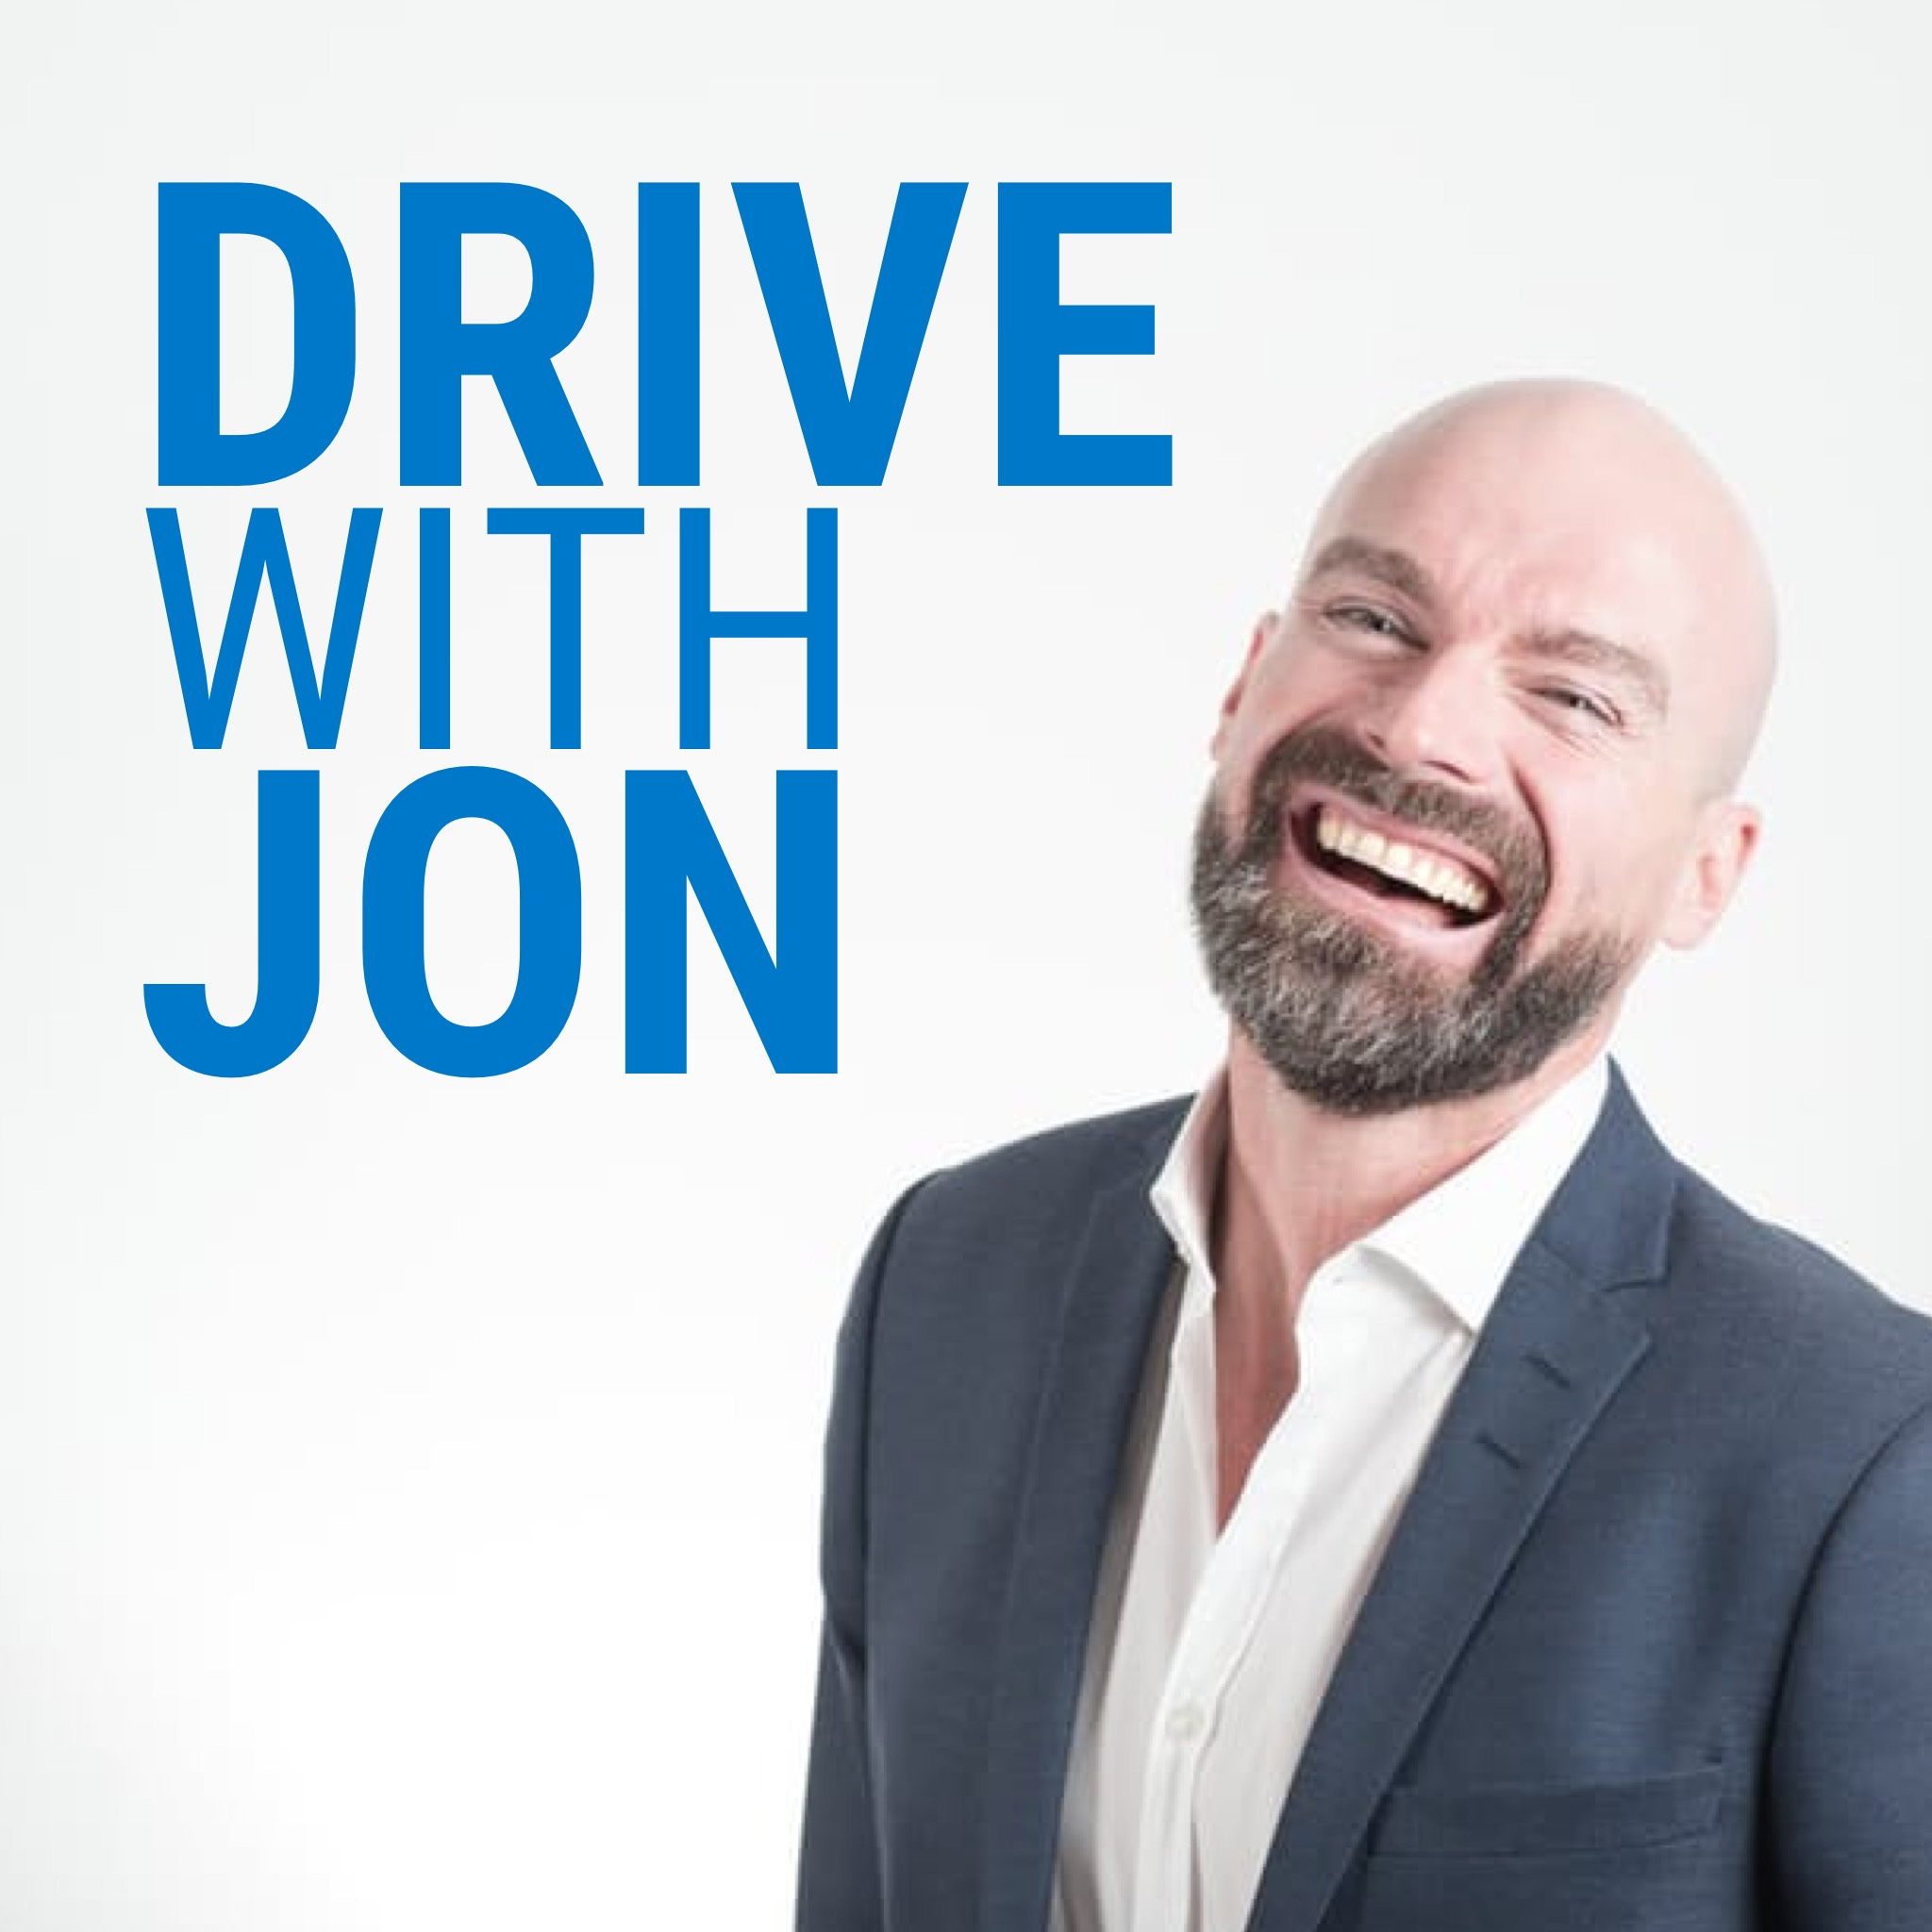 10:05 am - Drive with Jon